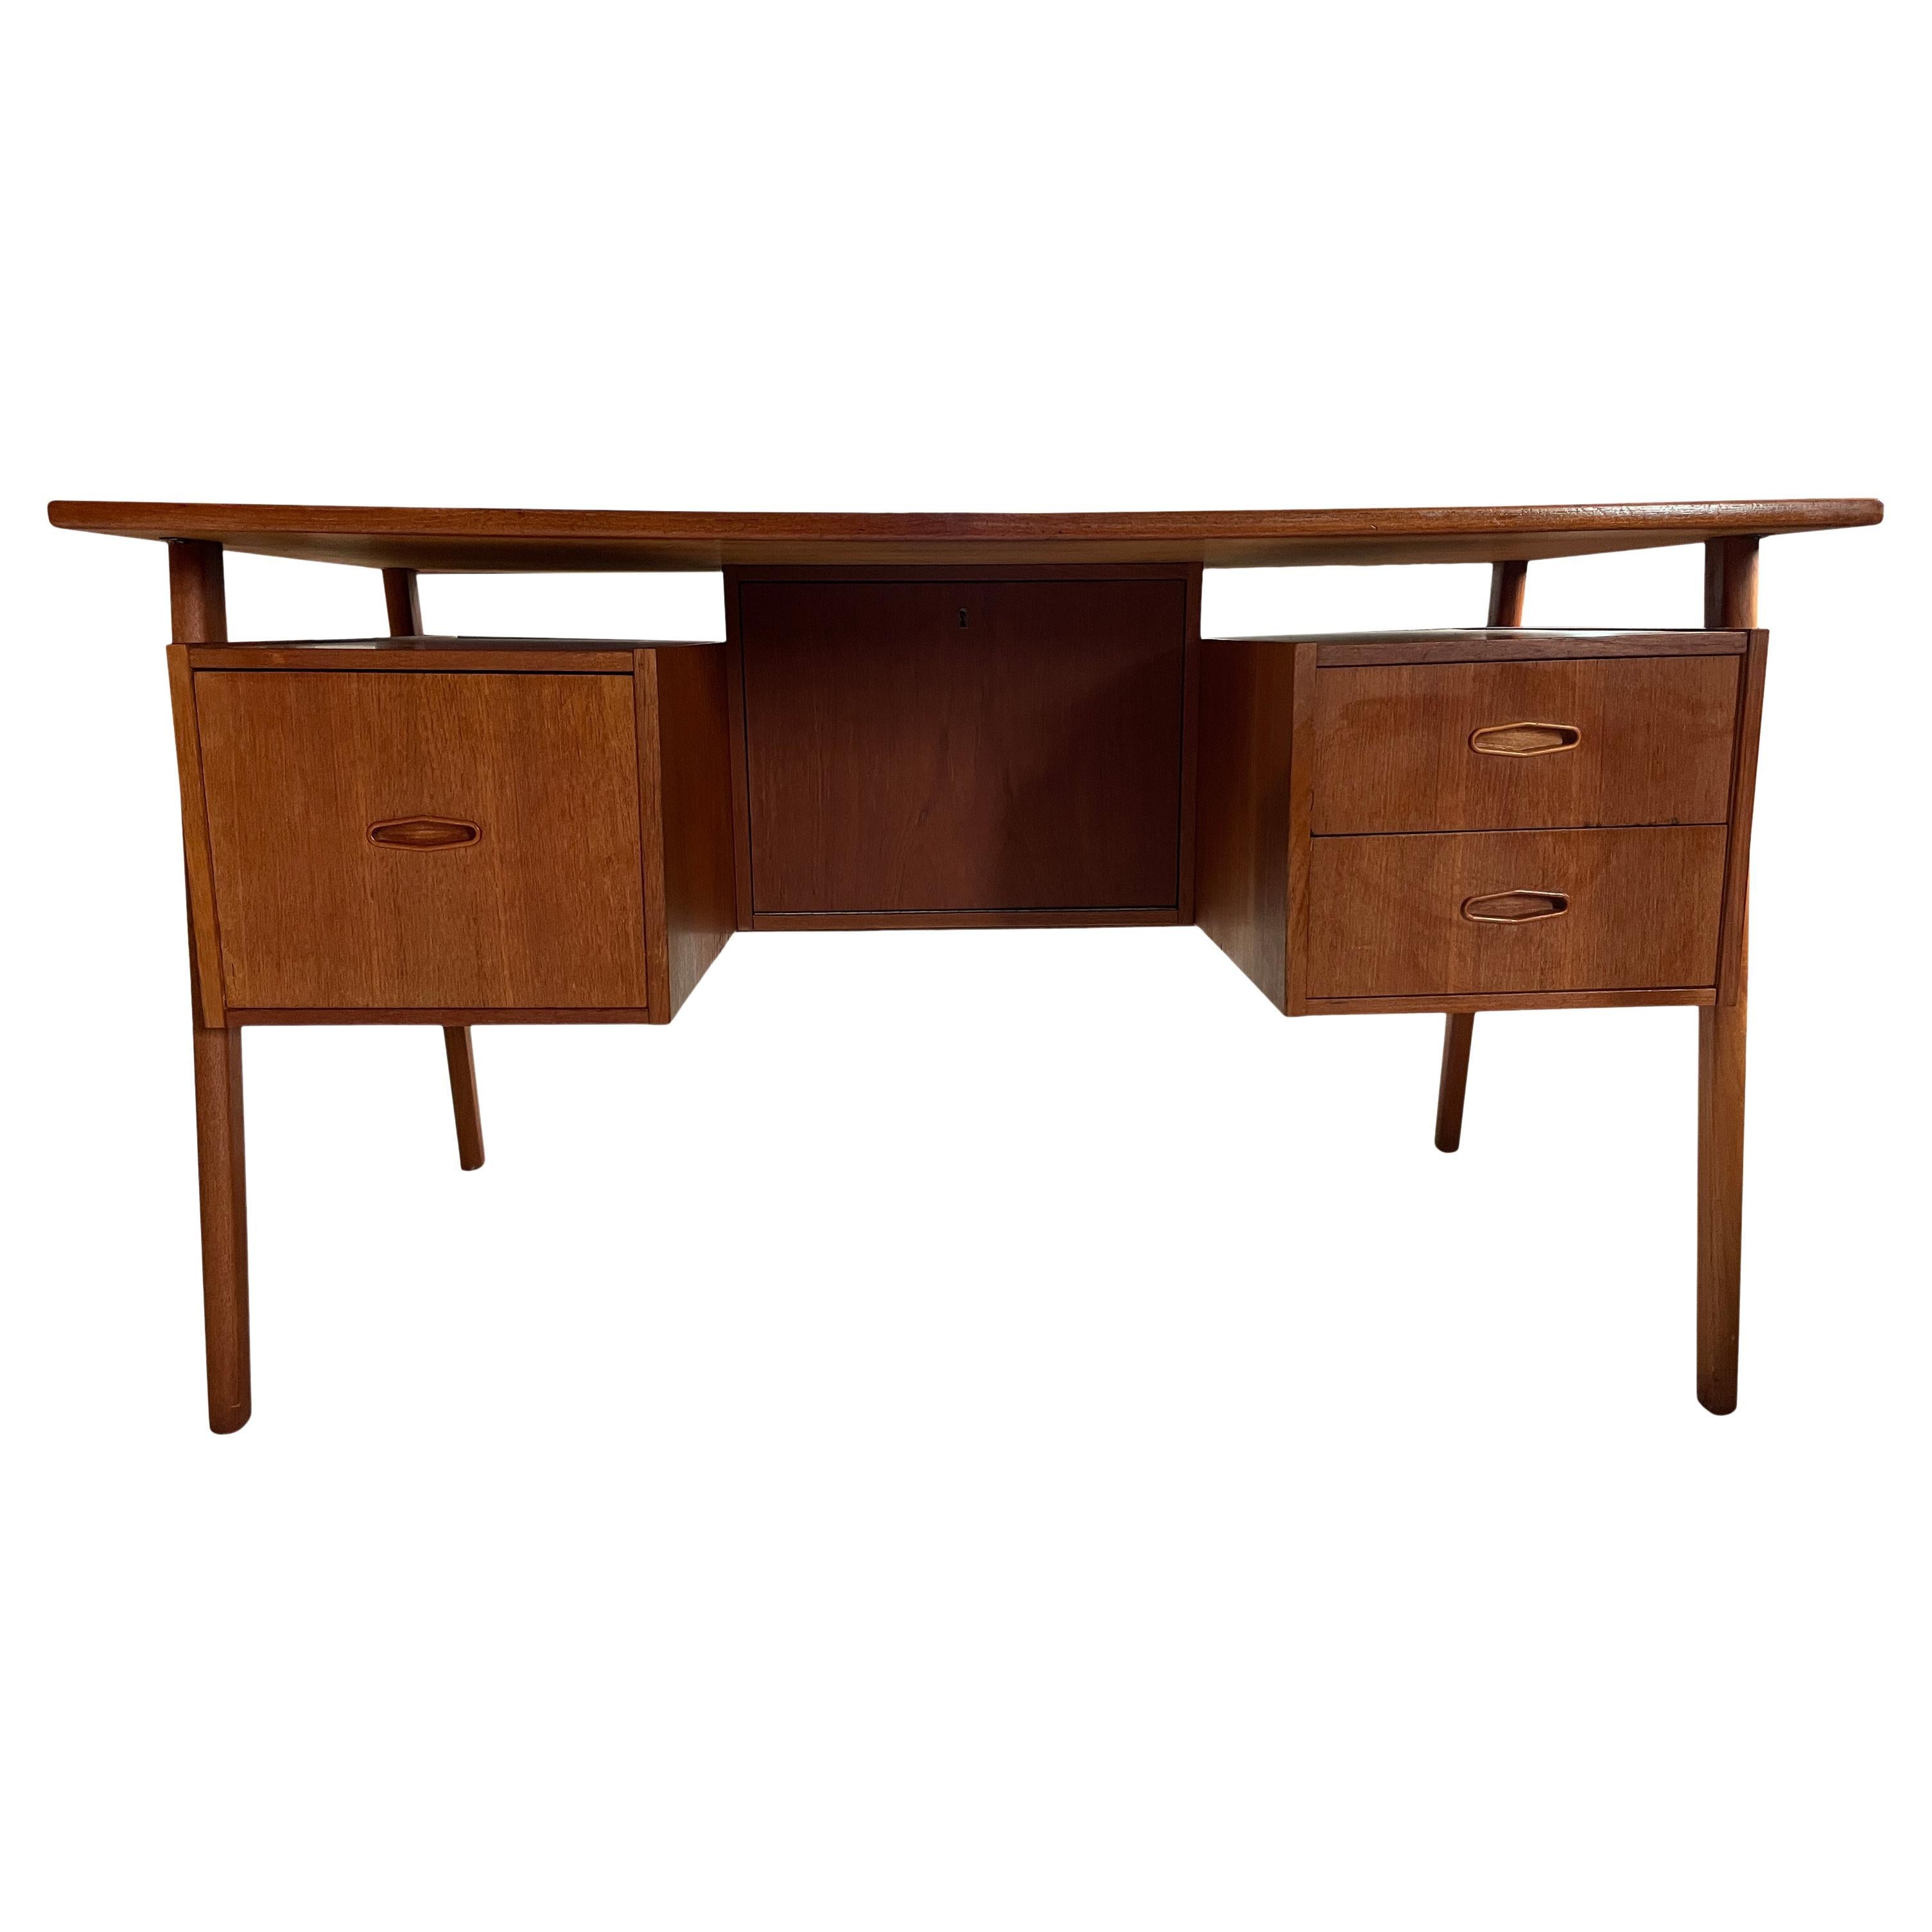 Midcentury Danish Modern Teak Desk 3 Drawers Top Lockable Center Cabinet